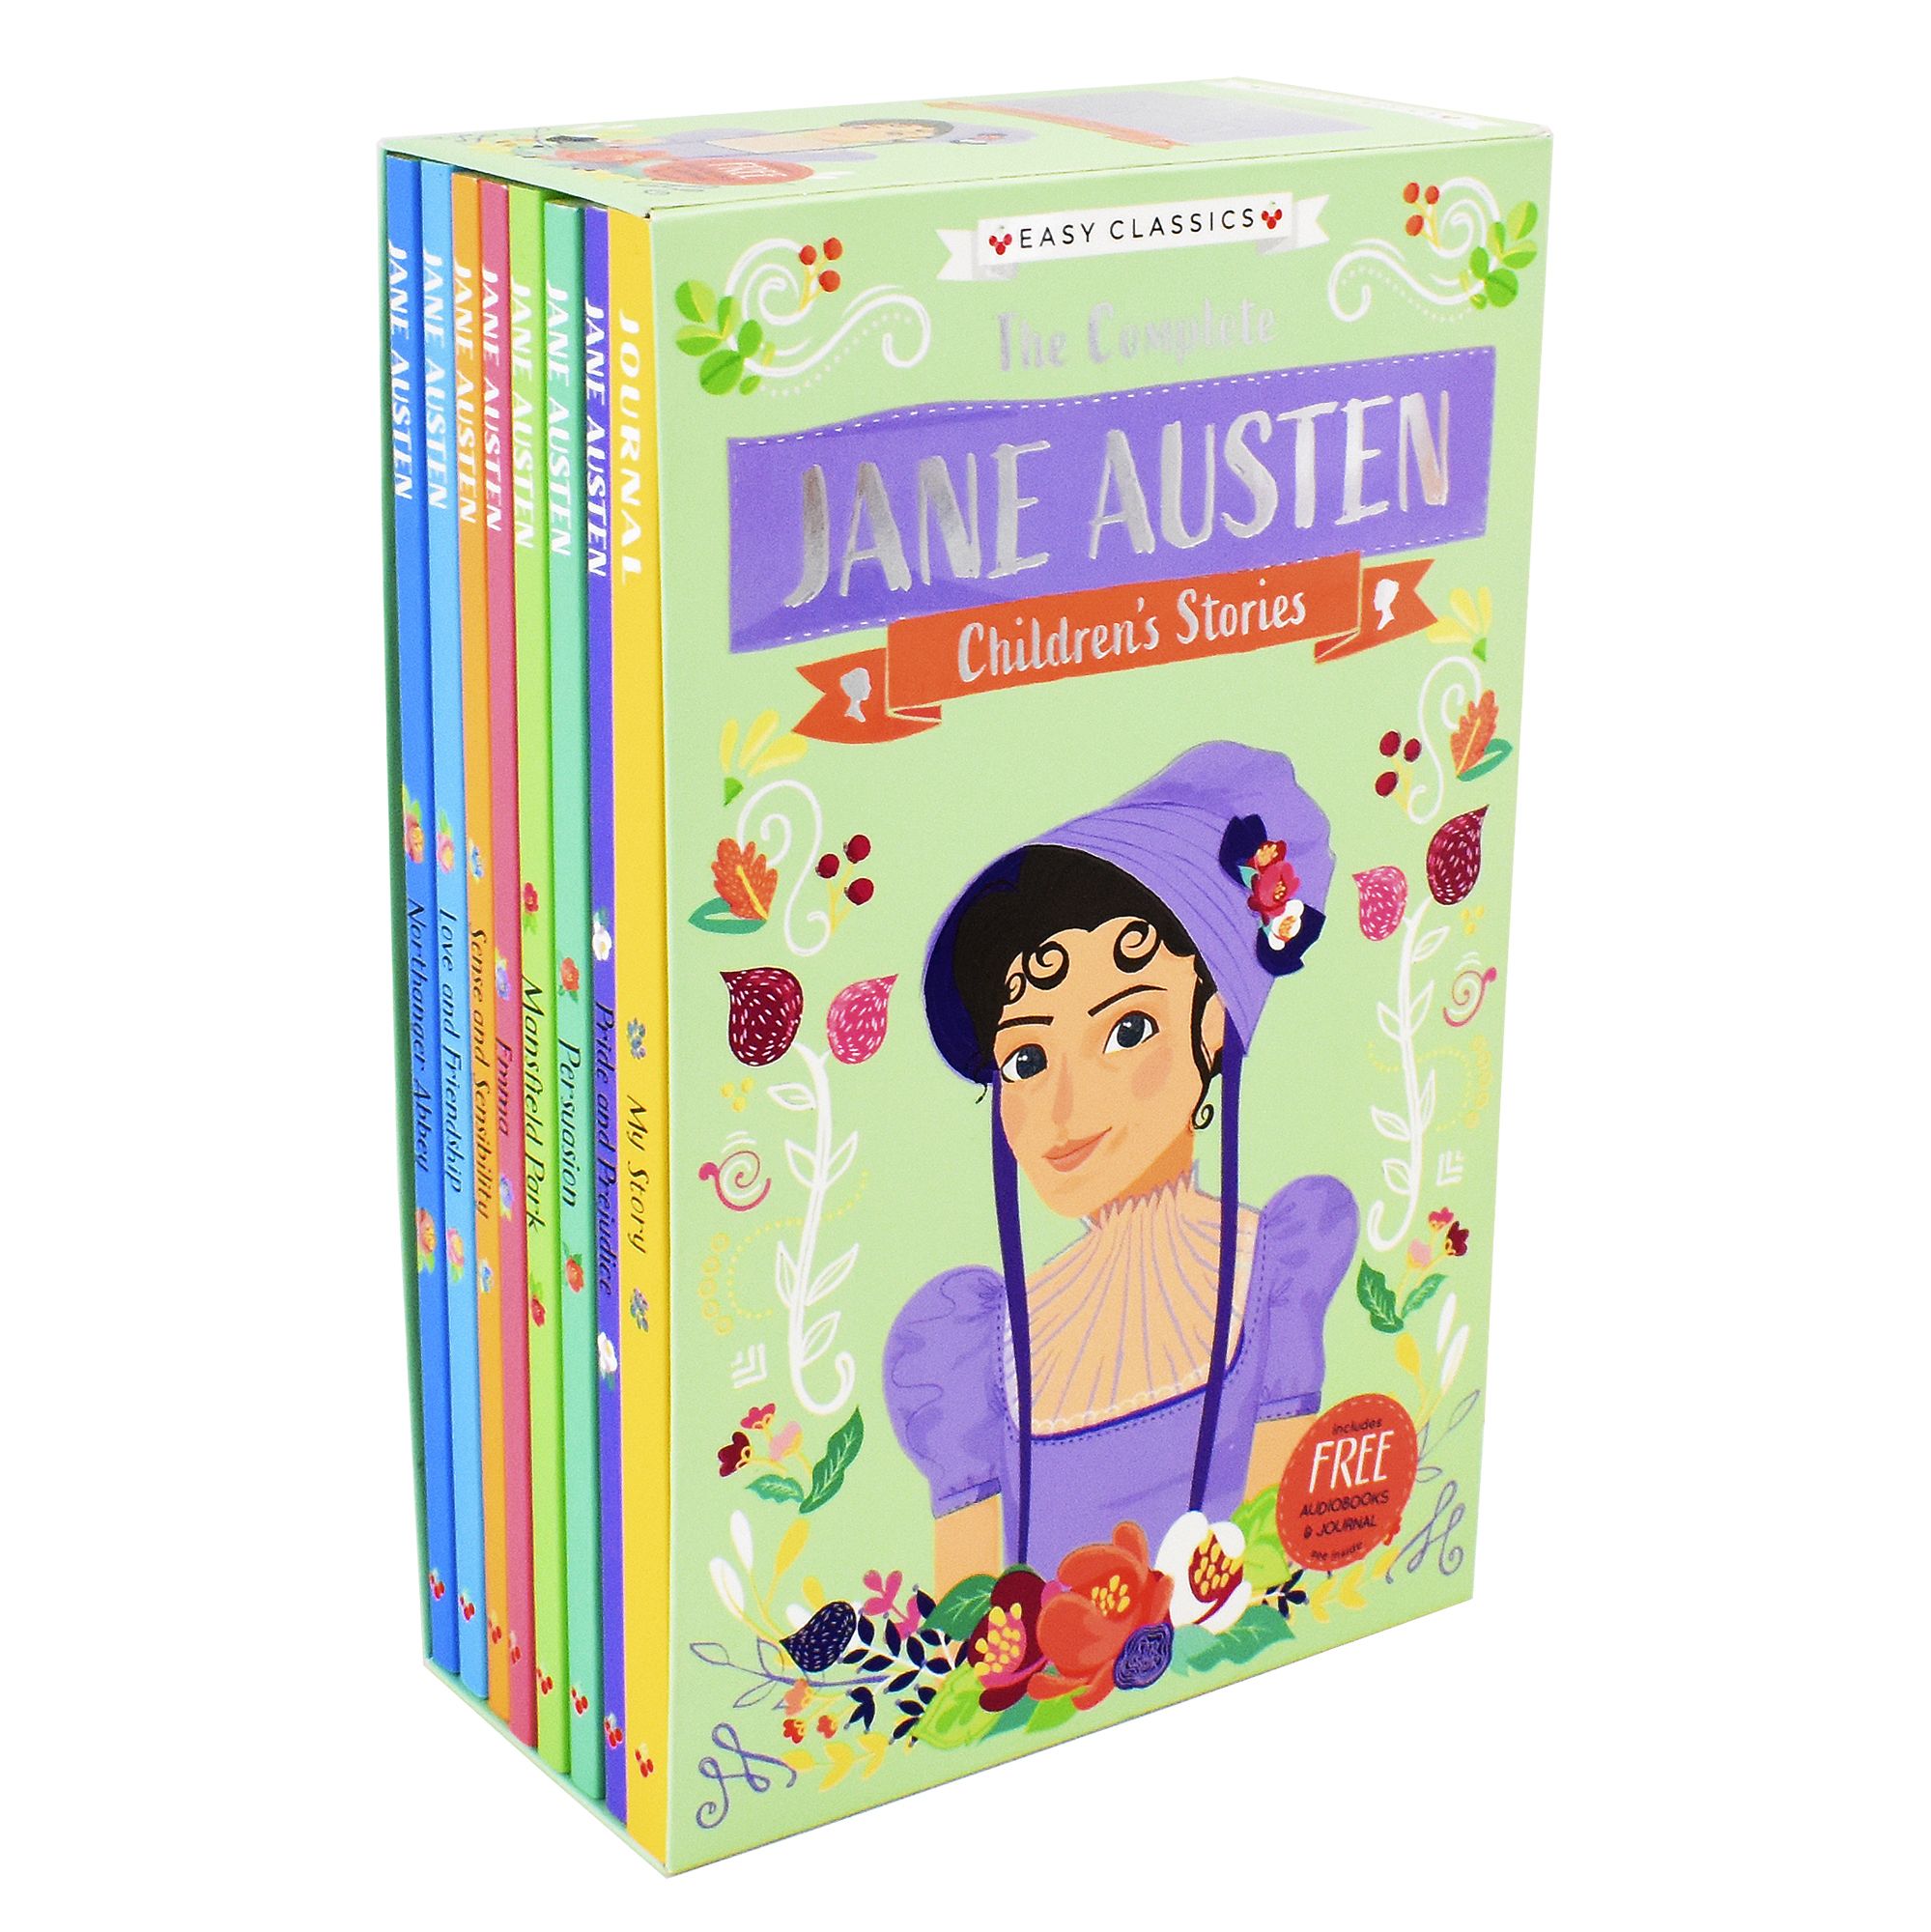 Jane Austen Childrens Easy Classics 8 Books Paperback Box Set - St Stephens Books